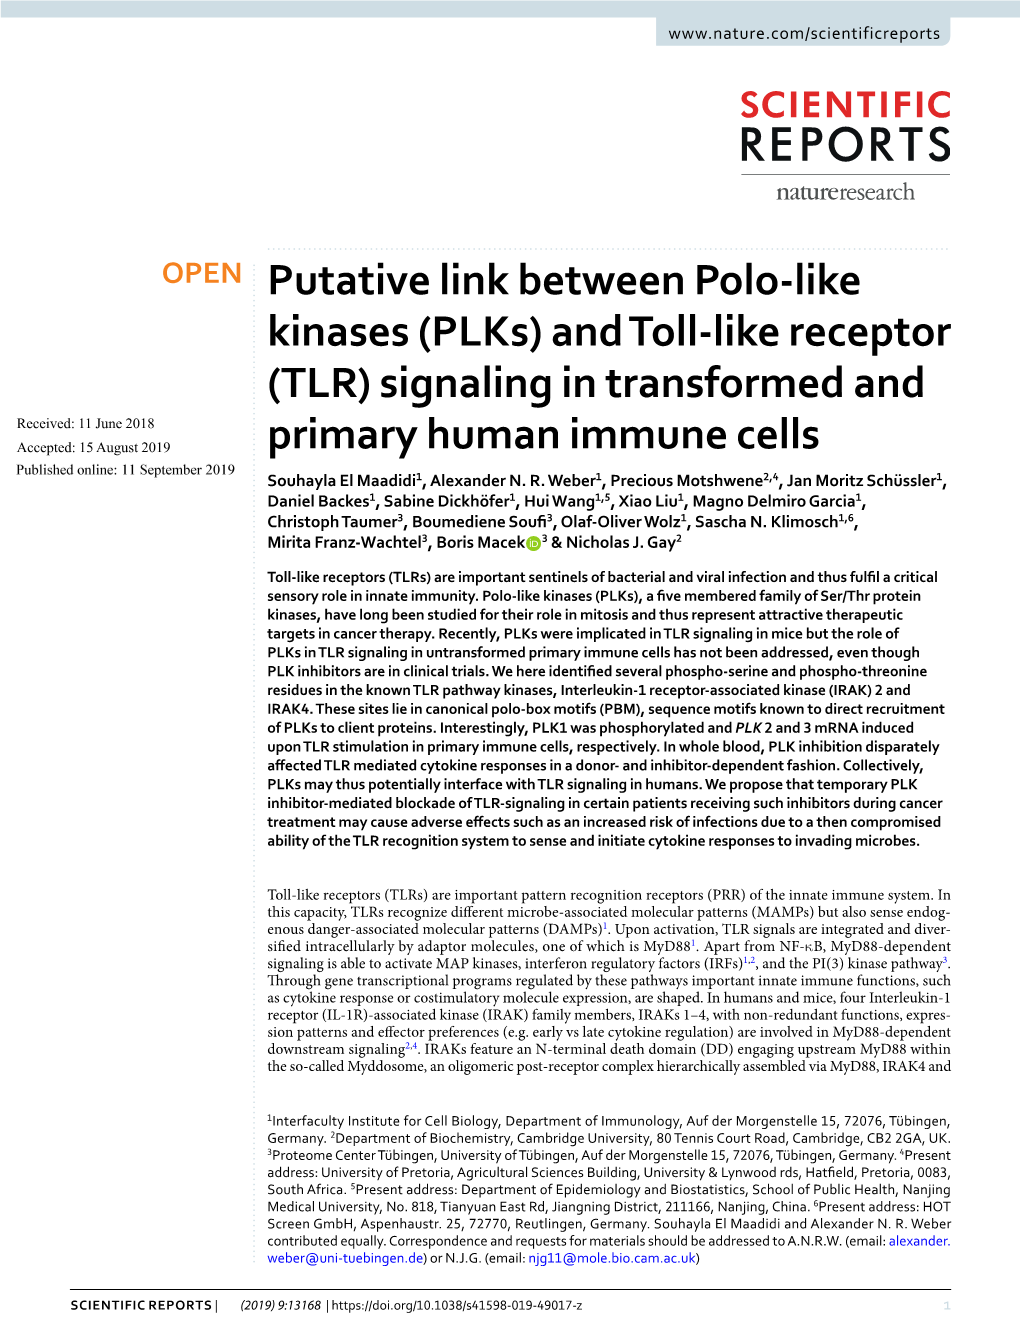 Putative Link Between Polo-Like Kinases (Plks)